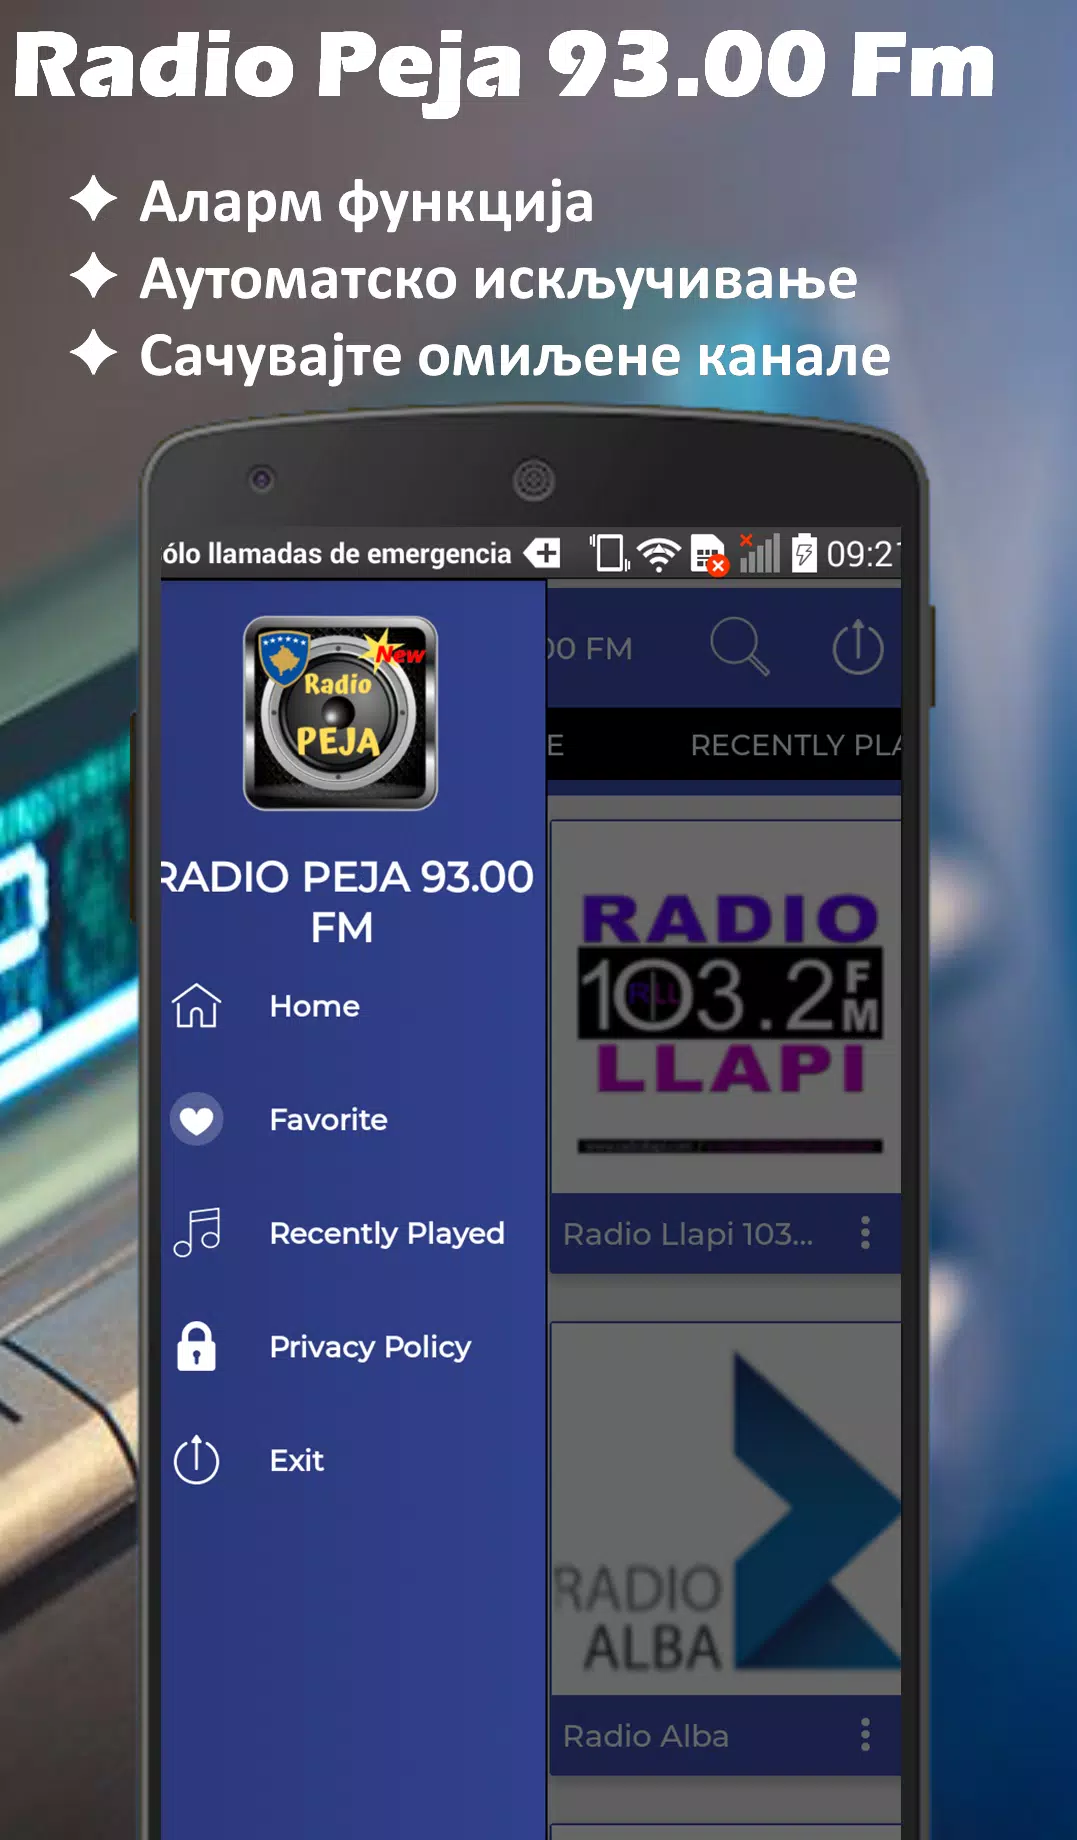 Radio Peja 93.00Fm Live Kosovo for Android - APK Download